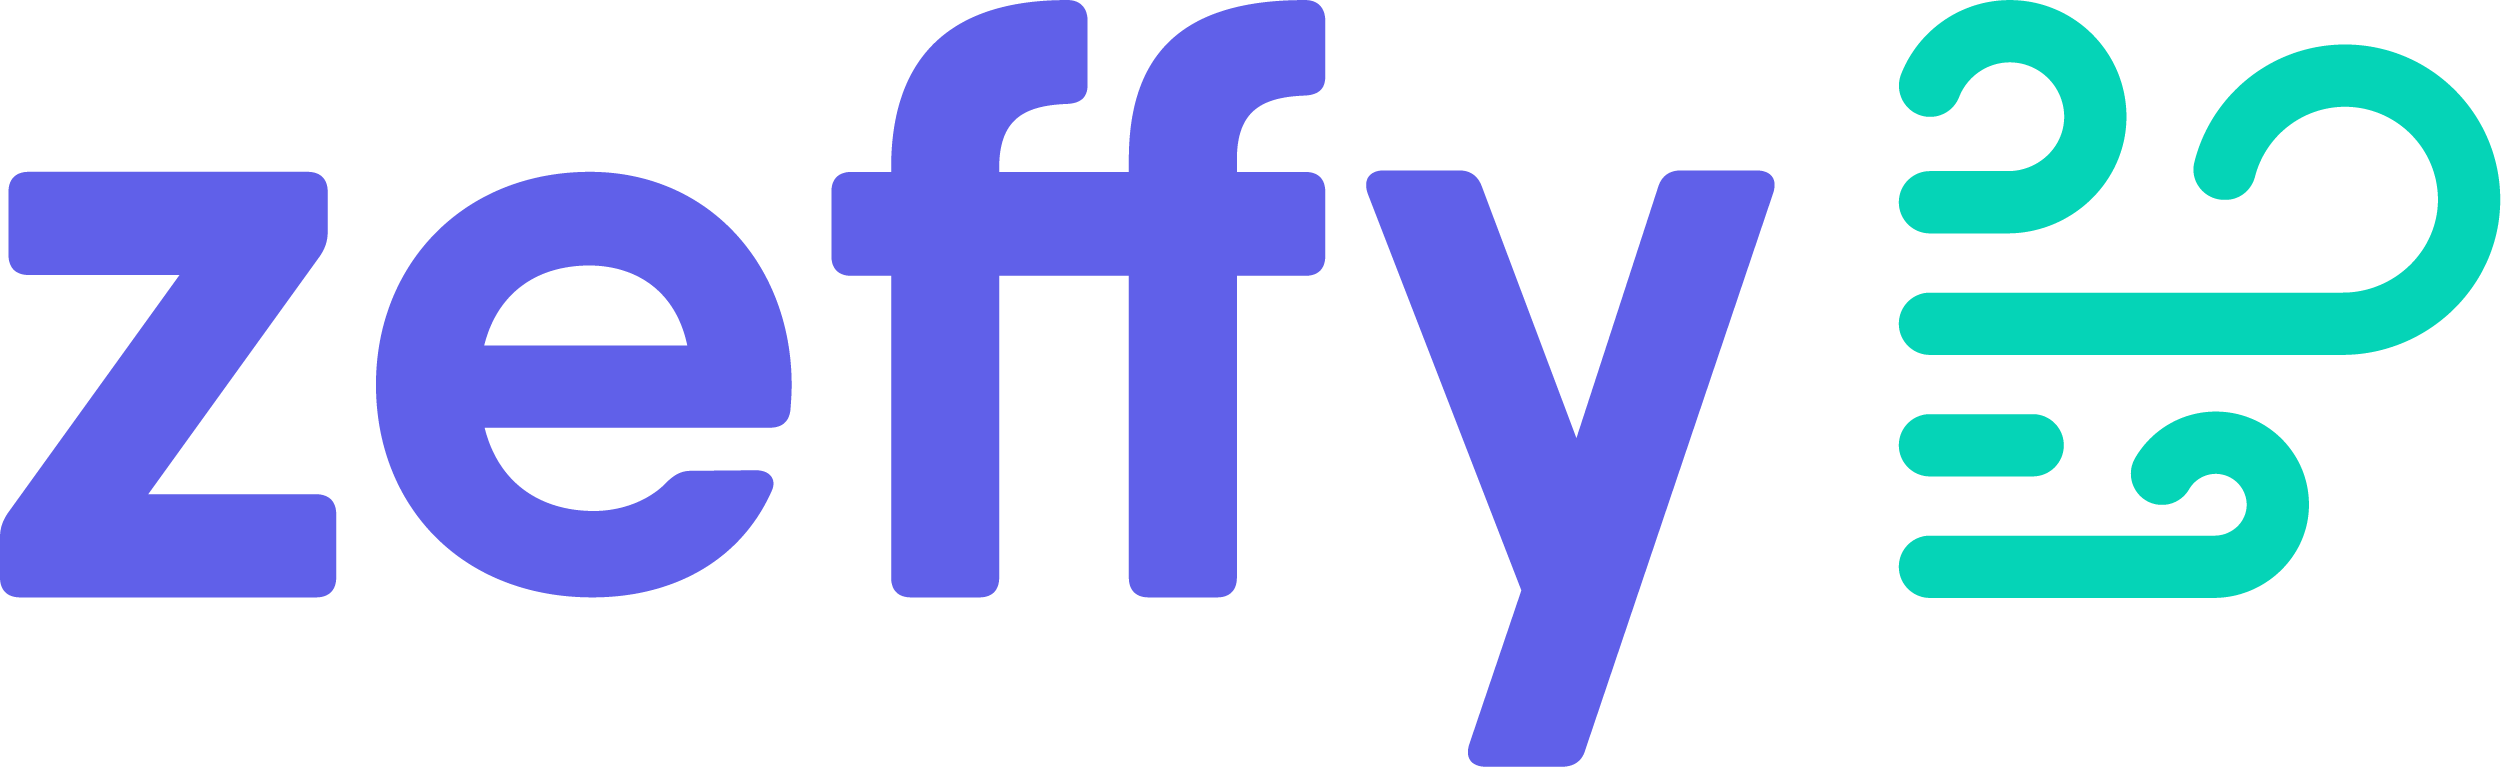 zeffy-logo